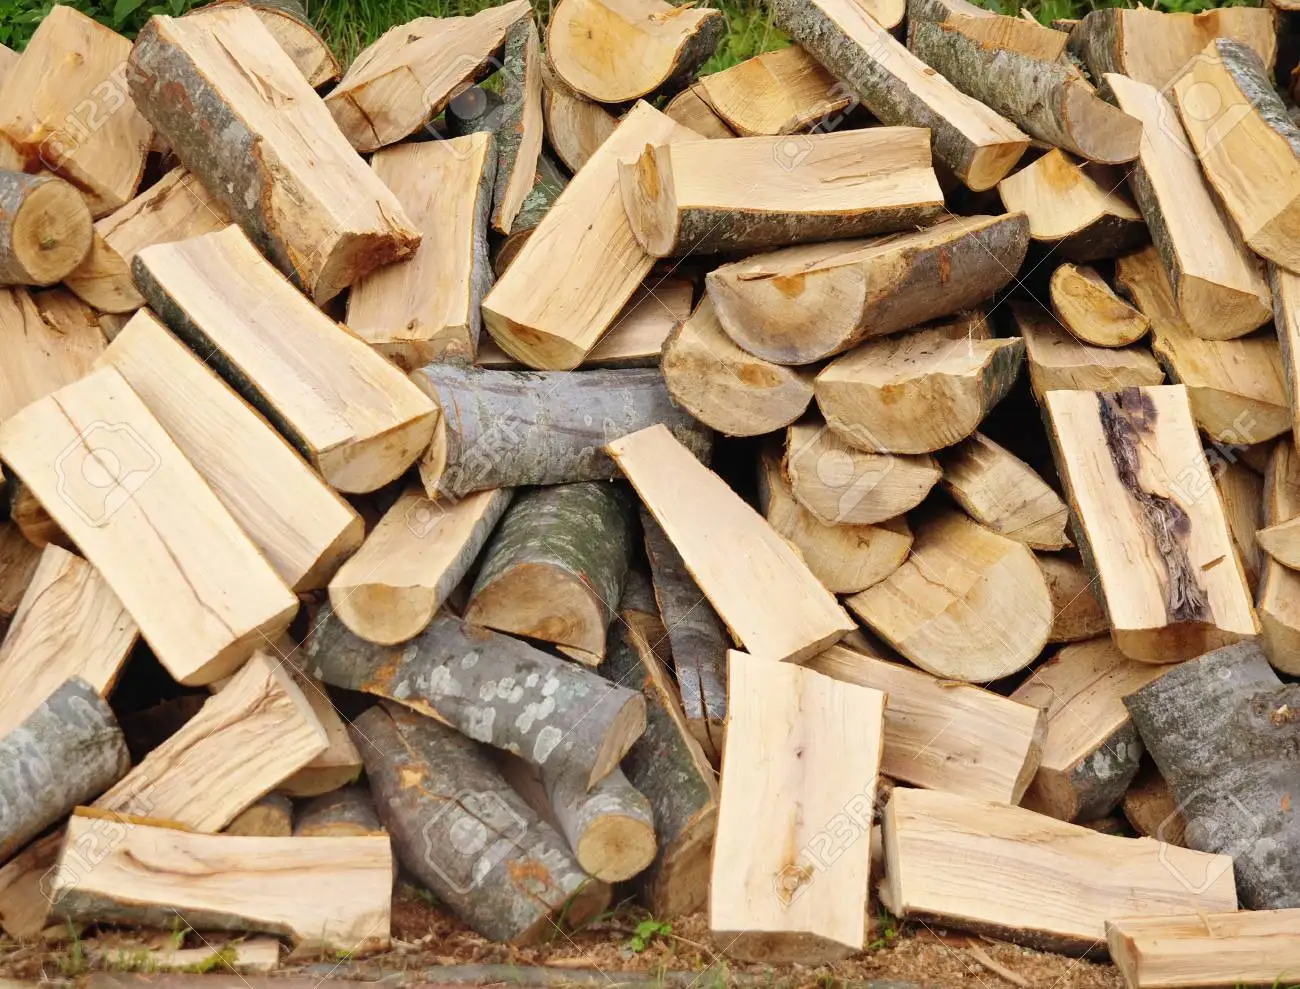 White Oak Firewood Firewood Logs Hardwood Logs For Sale Buy Oak Logs Fresh Cut European White Ash Logs Firewood For Sale Europe Product On Alibaba Com